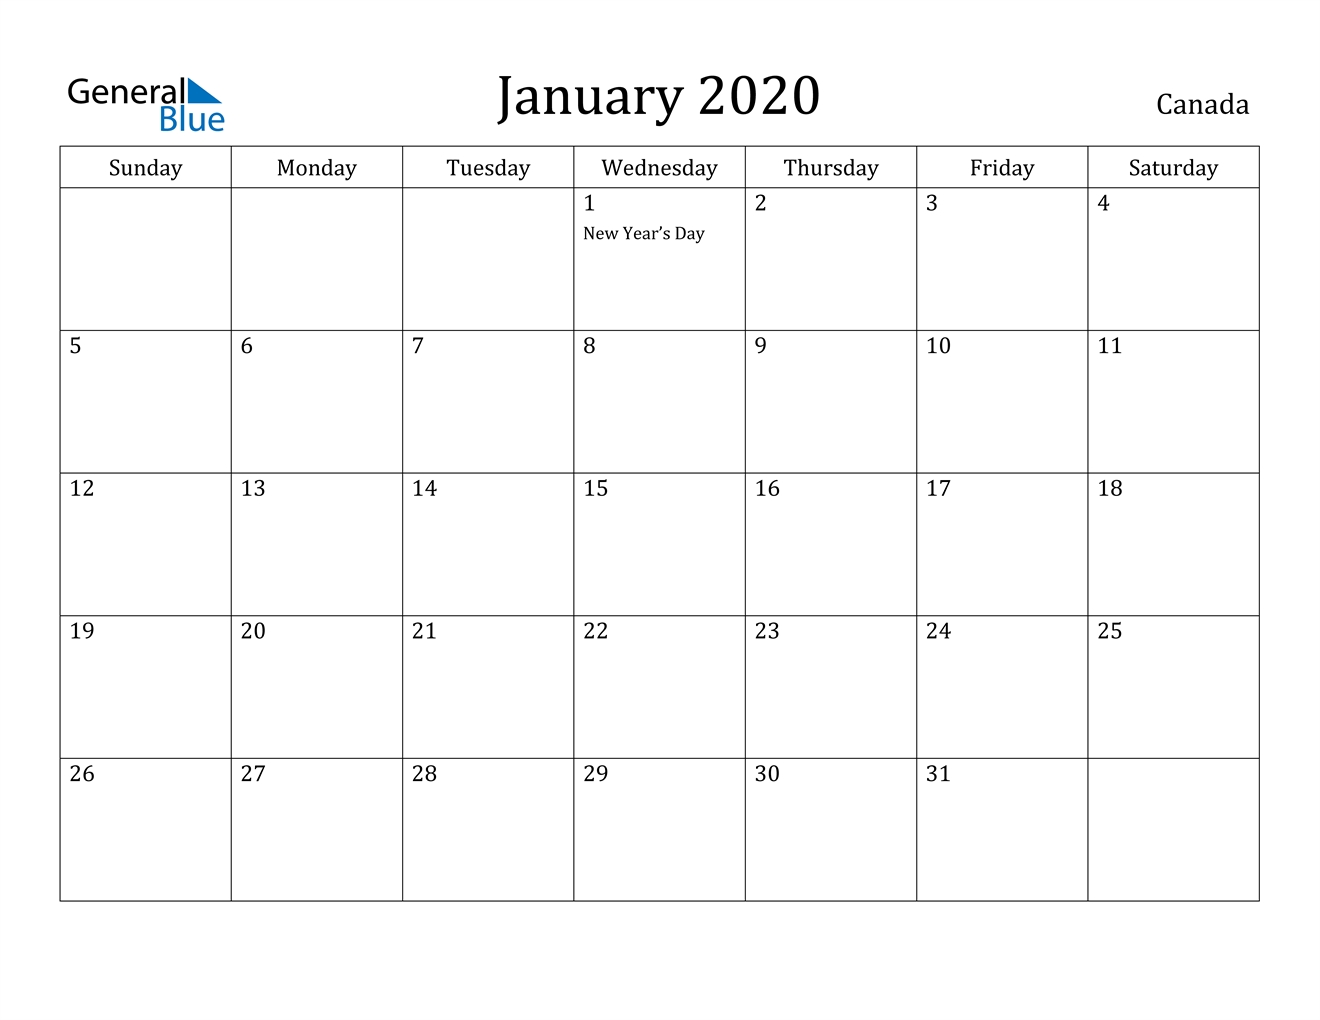 January 2020 Calendar - Canada Exceptional January 2020 Calendar Printable Canada